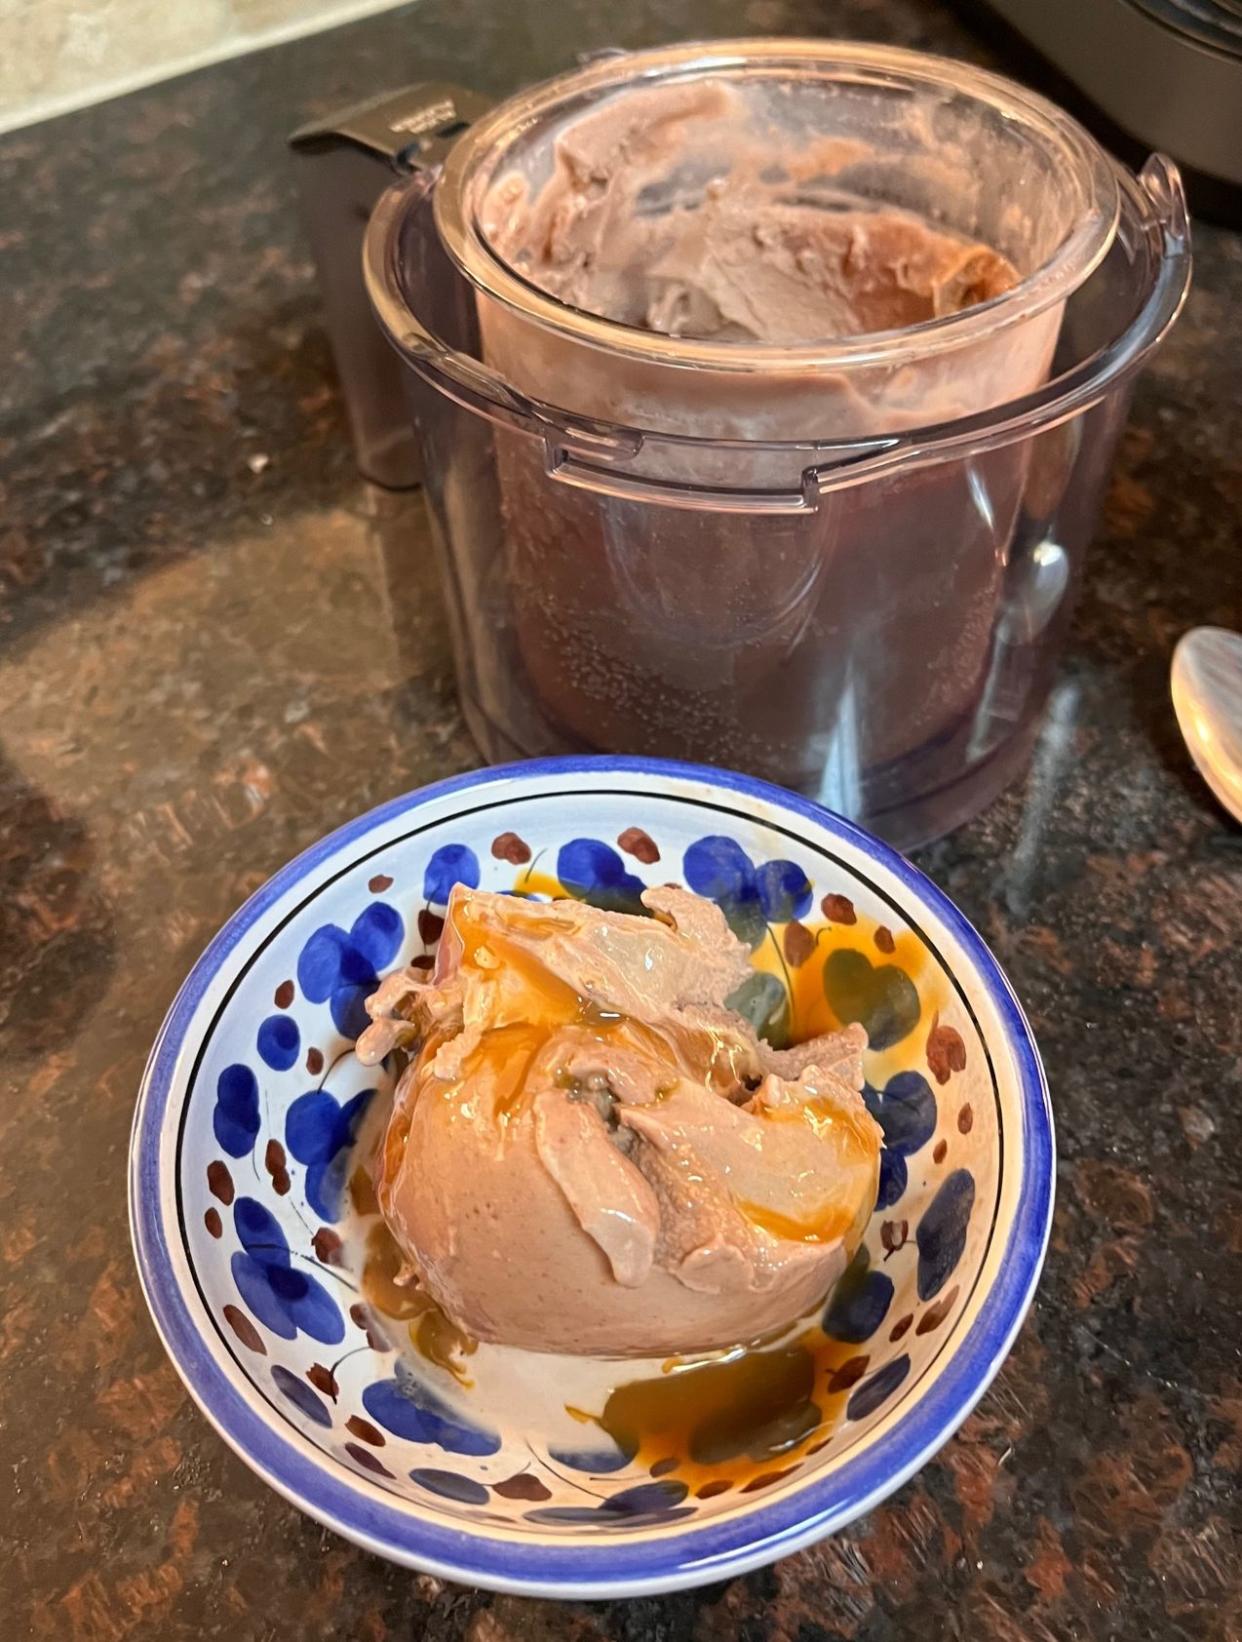 A bowl of chocolate ice cream made by the Ninja Creami.